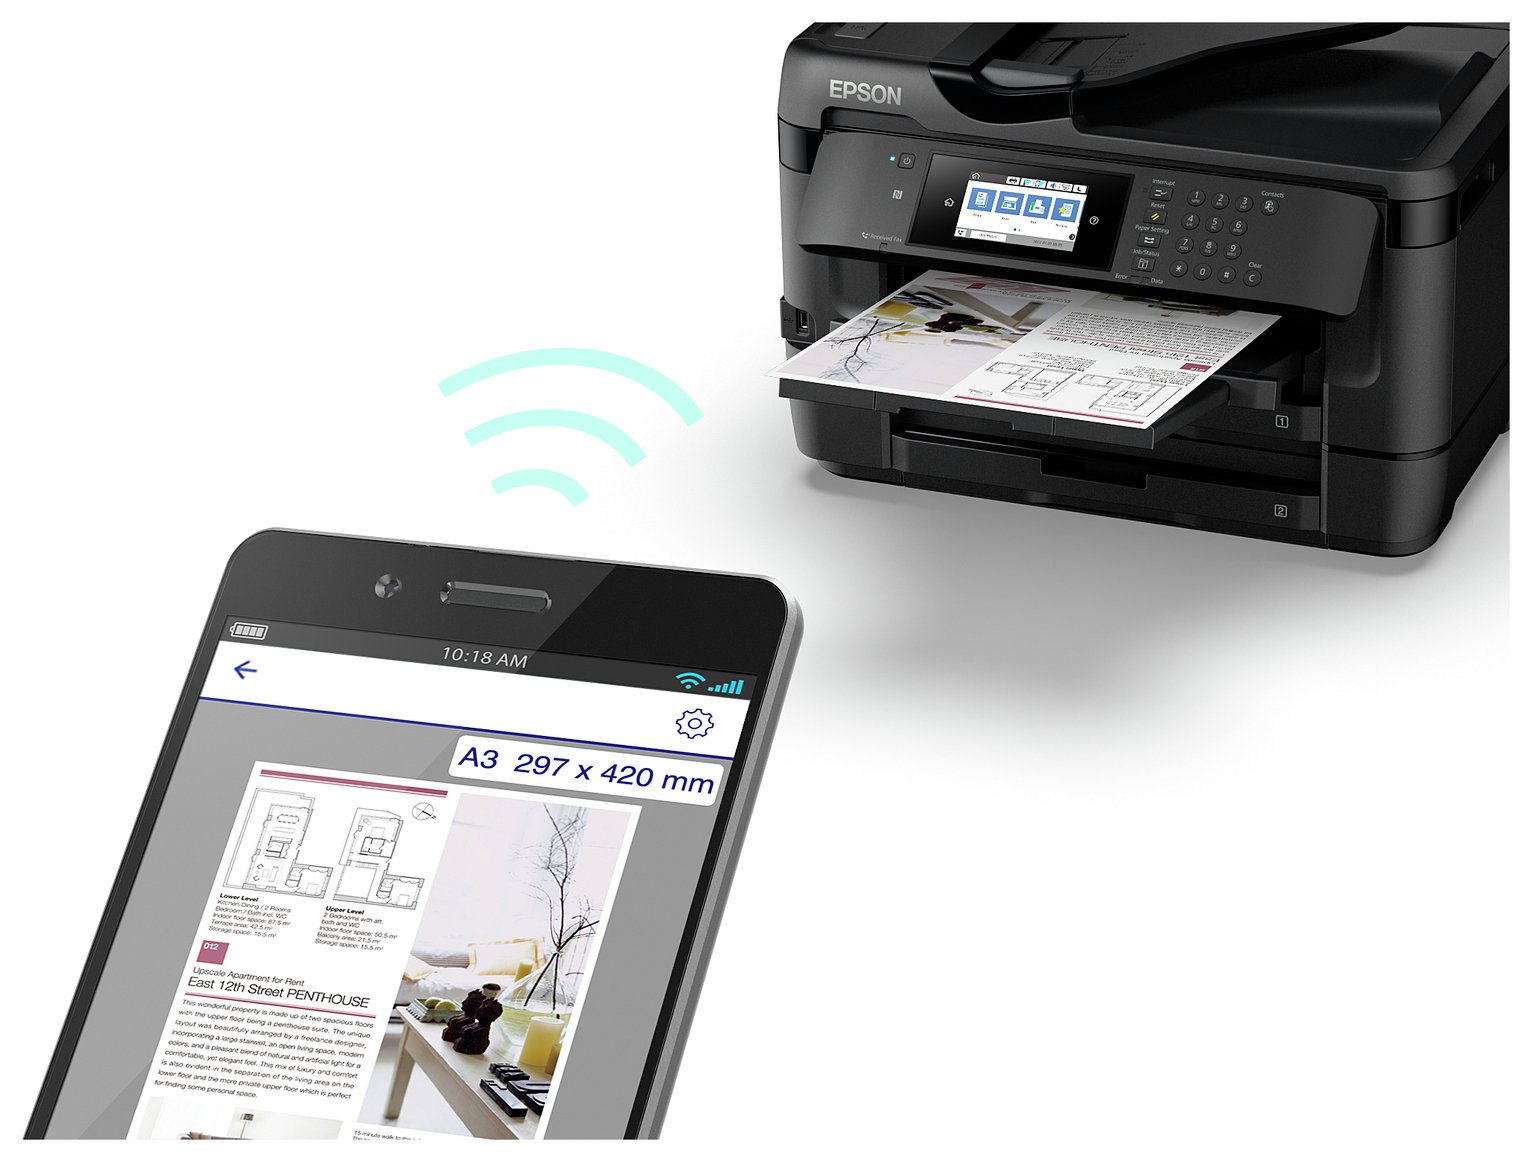 Epson Workforce Wf 7720 All In One Wireless Printer Reviews 0453